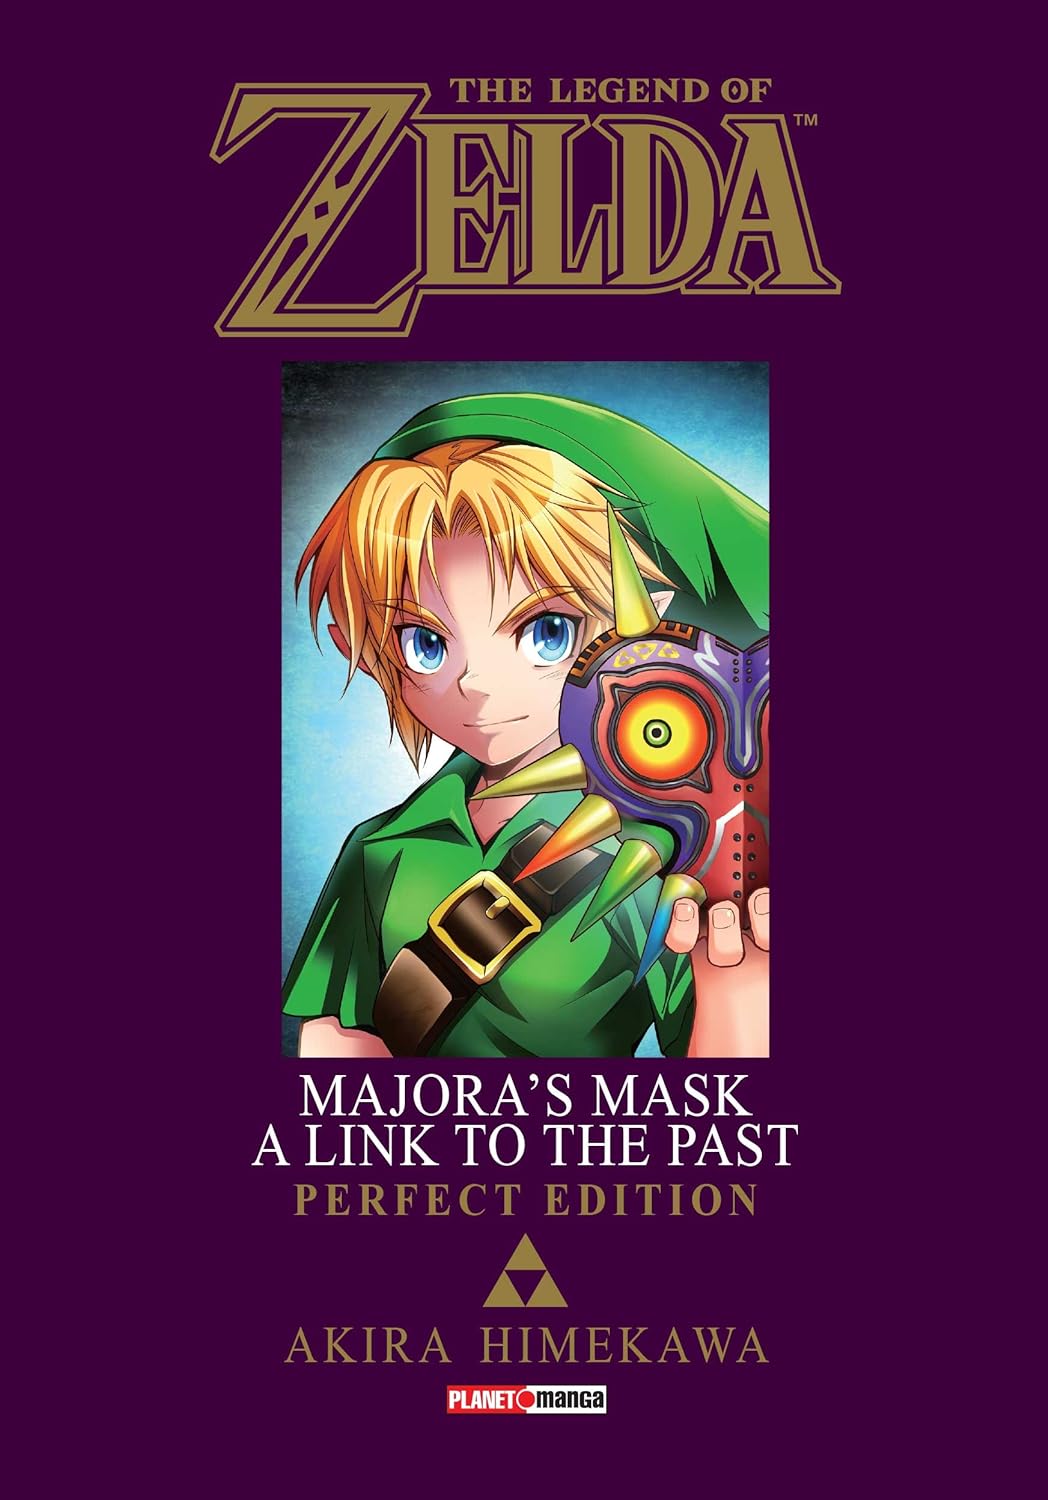 The Legend of Zelda: A Link to the Past (HIMEKAWA Akira) cover 0